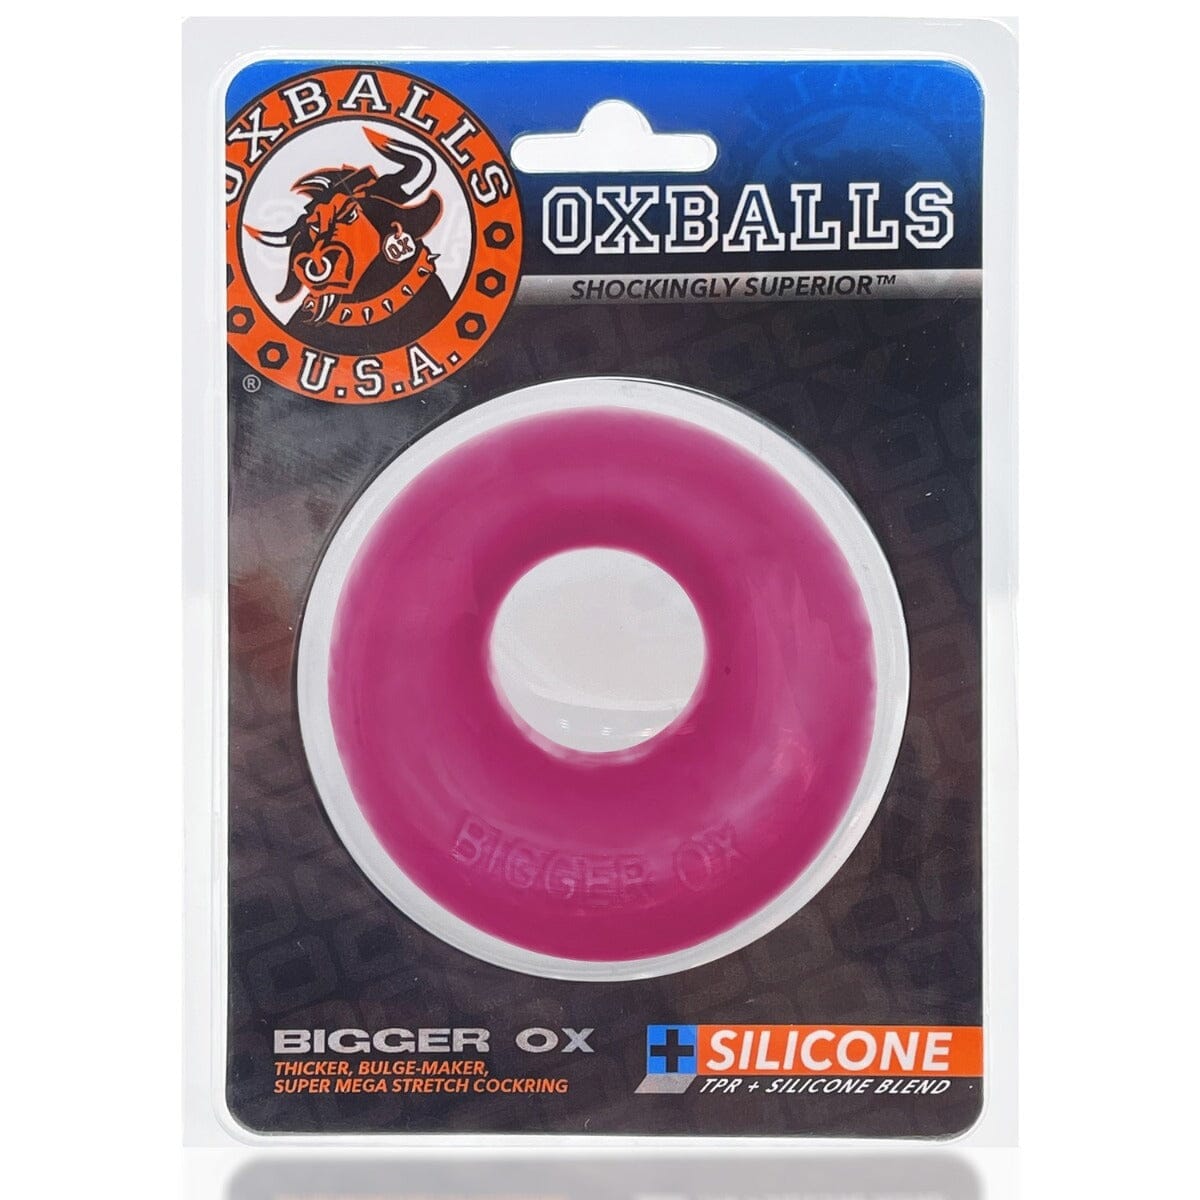 Oxballs Bigger Ox Thicker Bulge Maker Super Mega Stretch Cockring